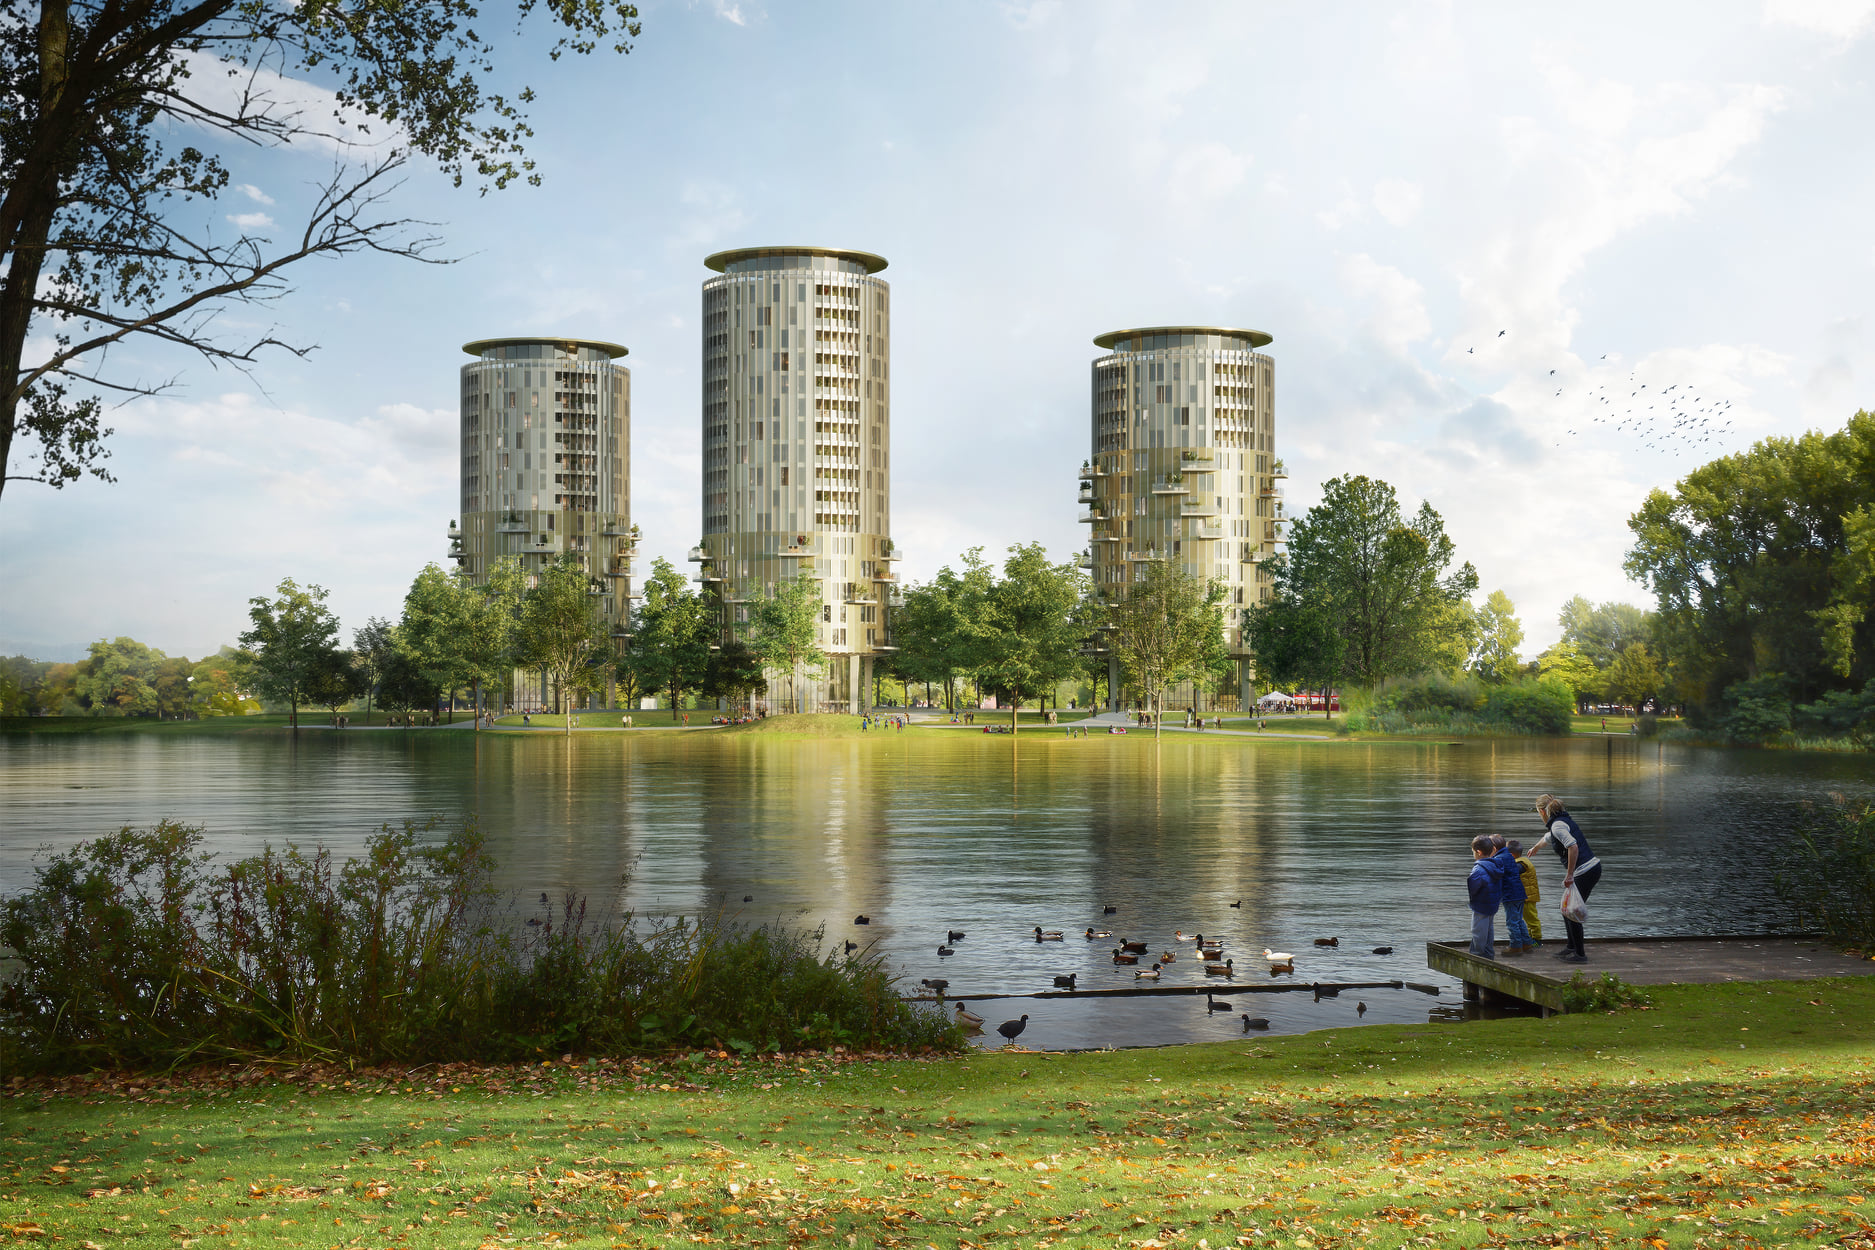 Brabantbad residential towers bring new life to Prins Hendrikpark in 's-Hertogenbosch